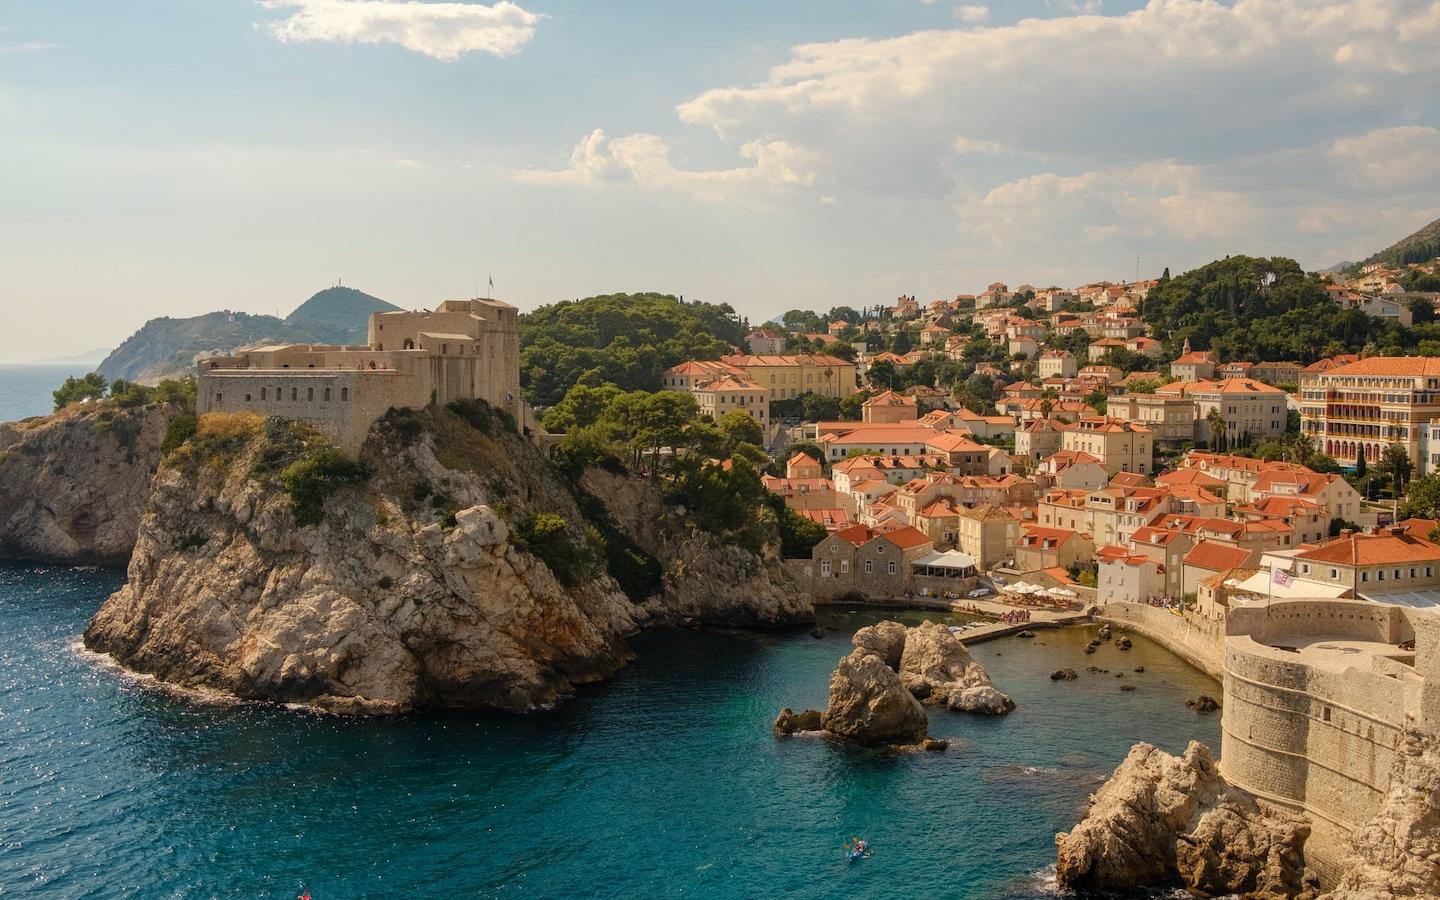 Dubrovnik, Croatie. Photo de Morgan sur Unsplash